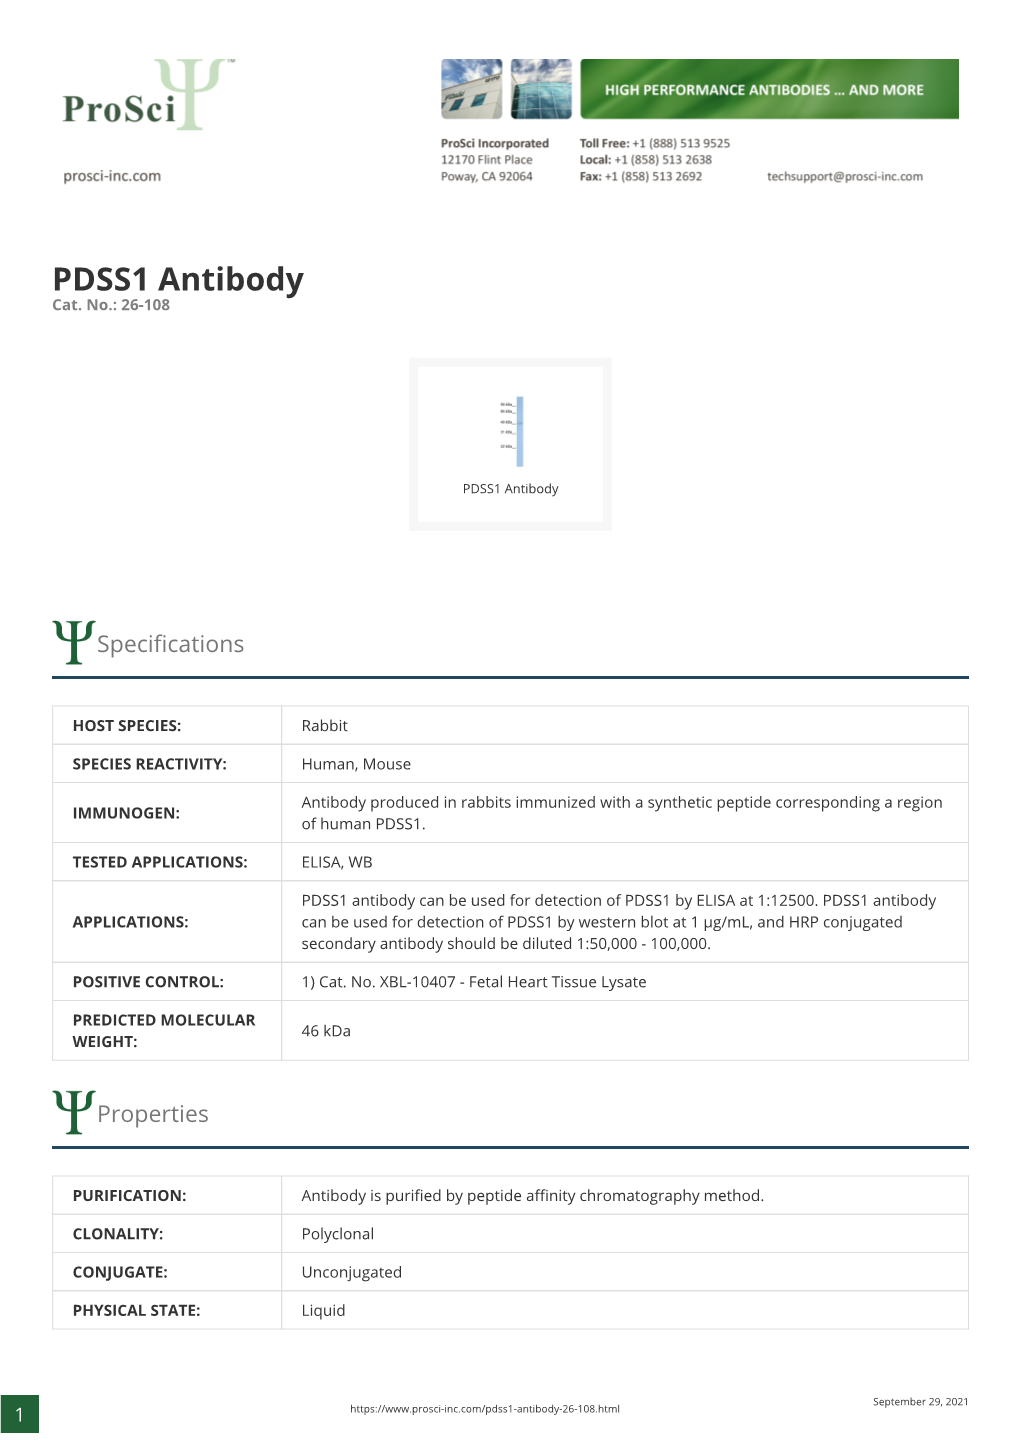 PDSS1 Antibody Cat